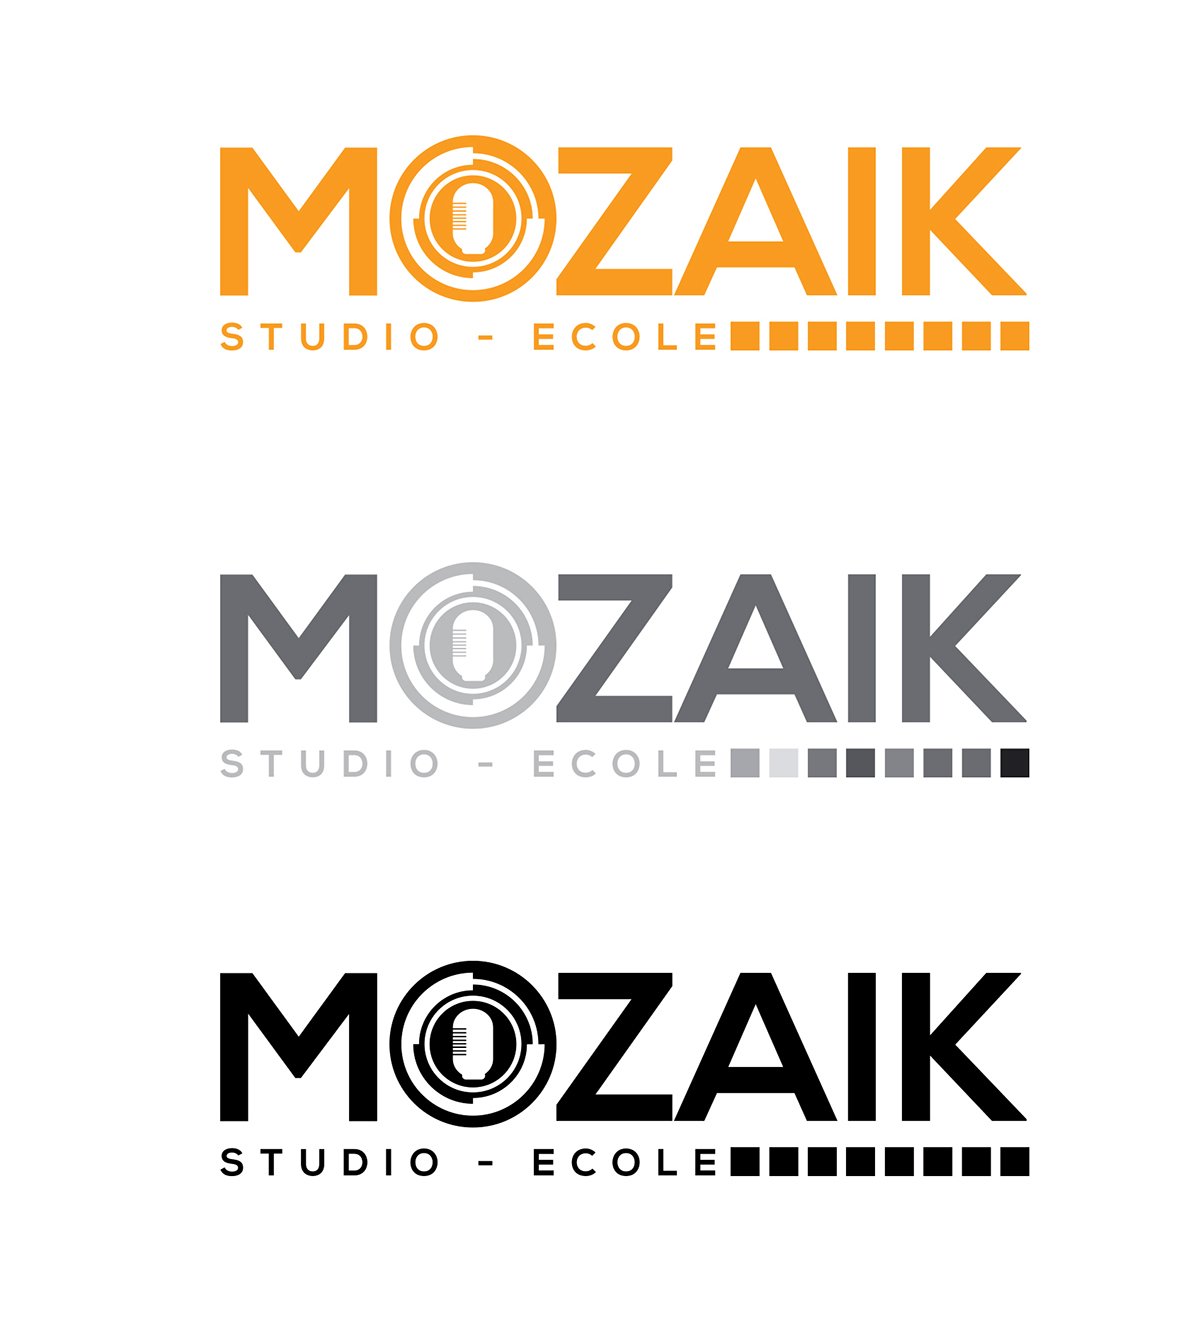 mozaik école studio logo journaliste abidjan Cote d'Ivoire journalisme Radio